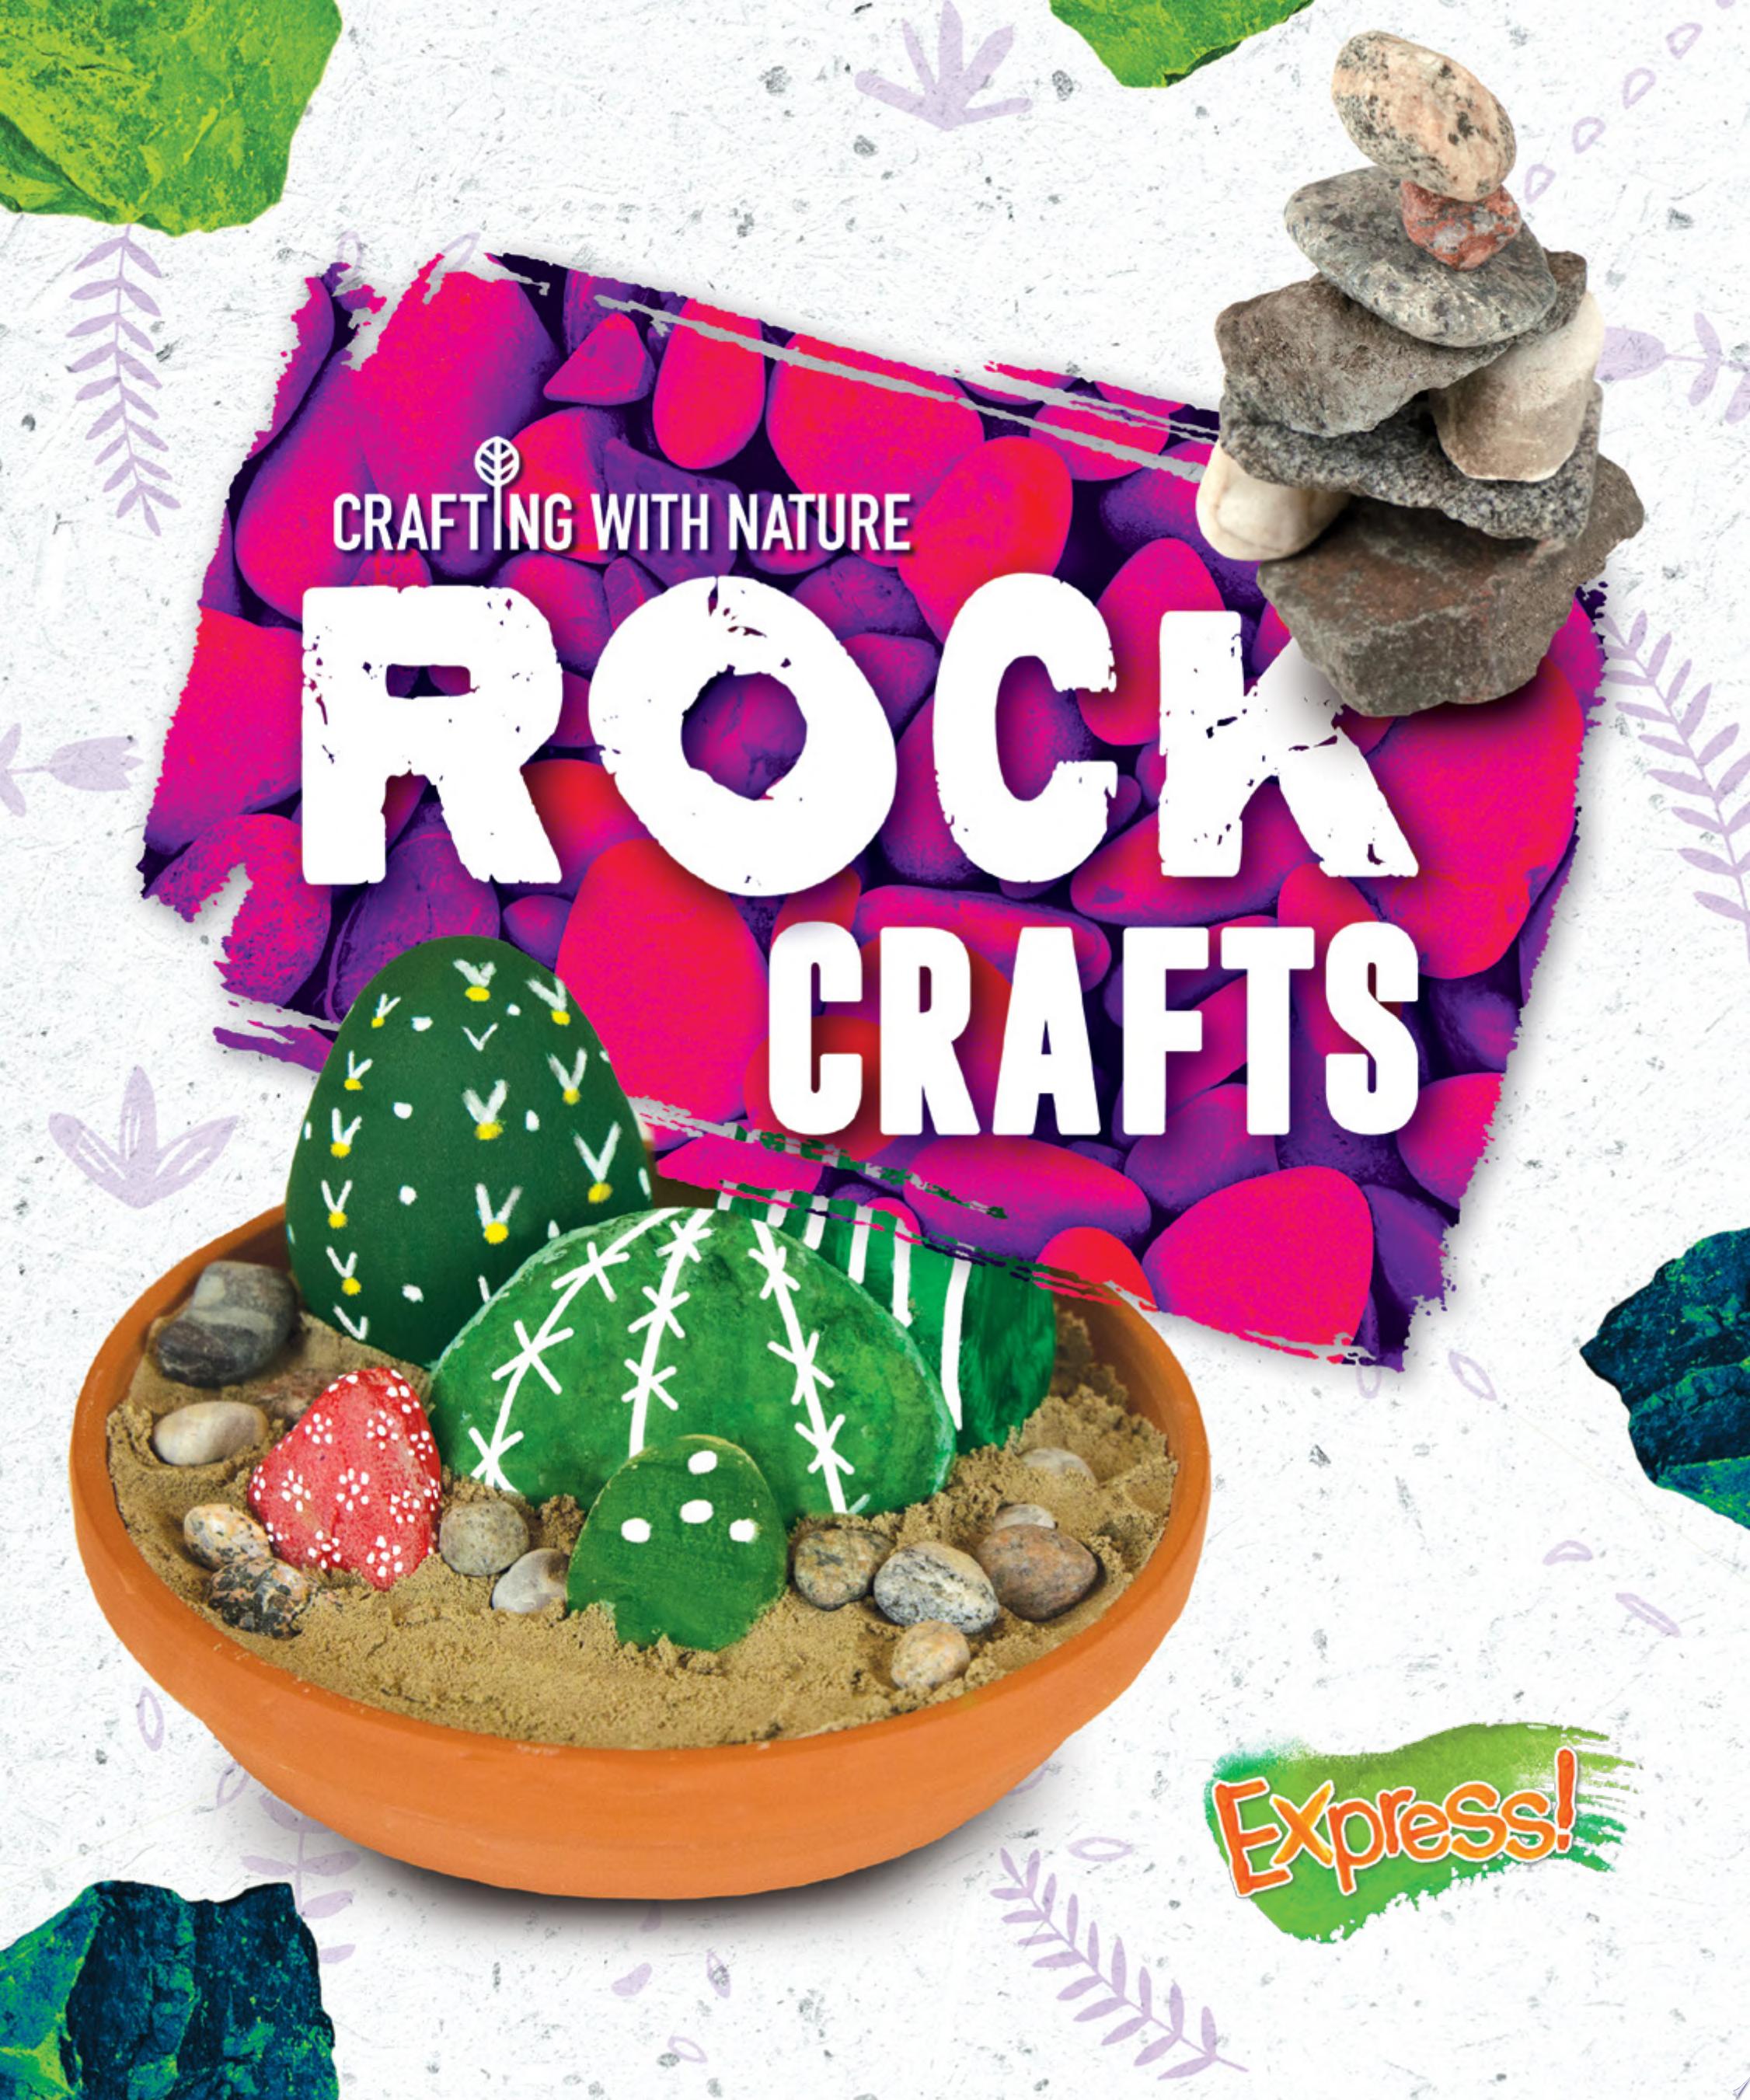 Image for "Rock Crafts"